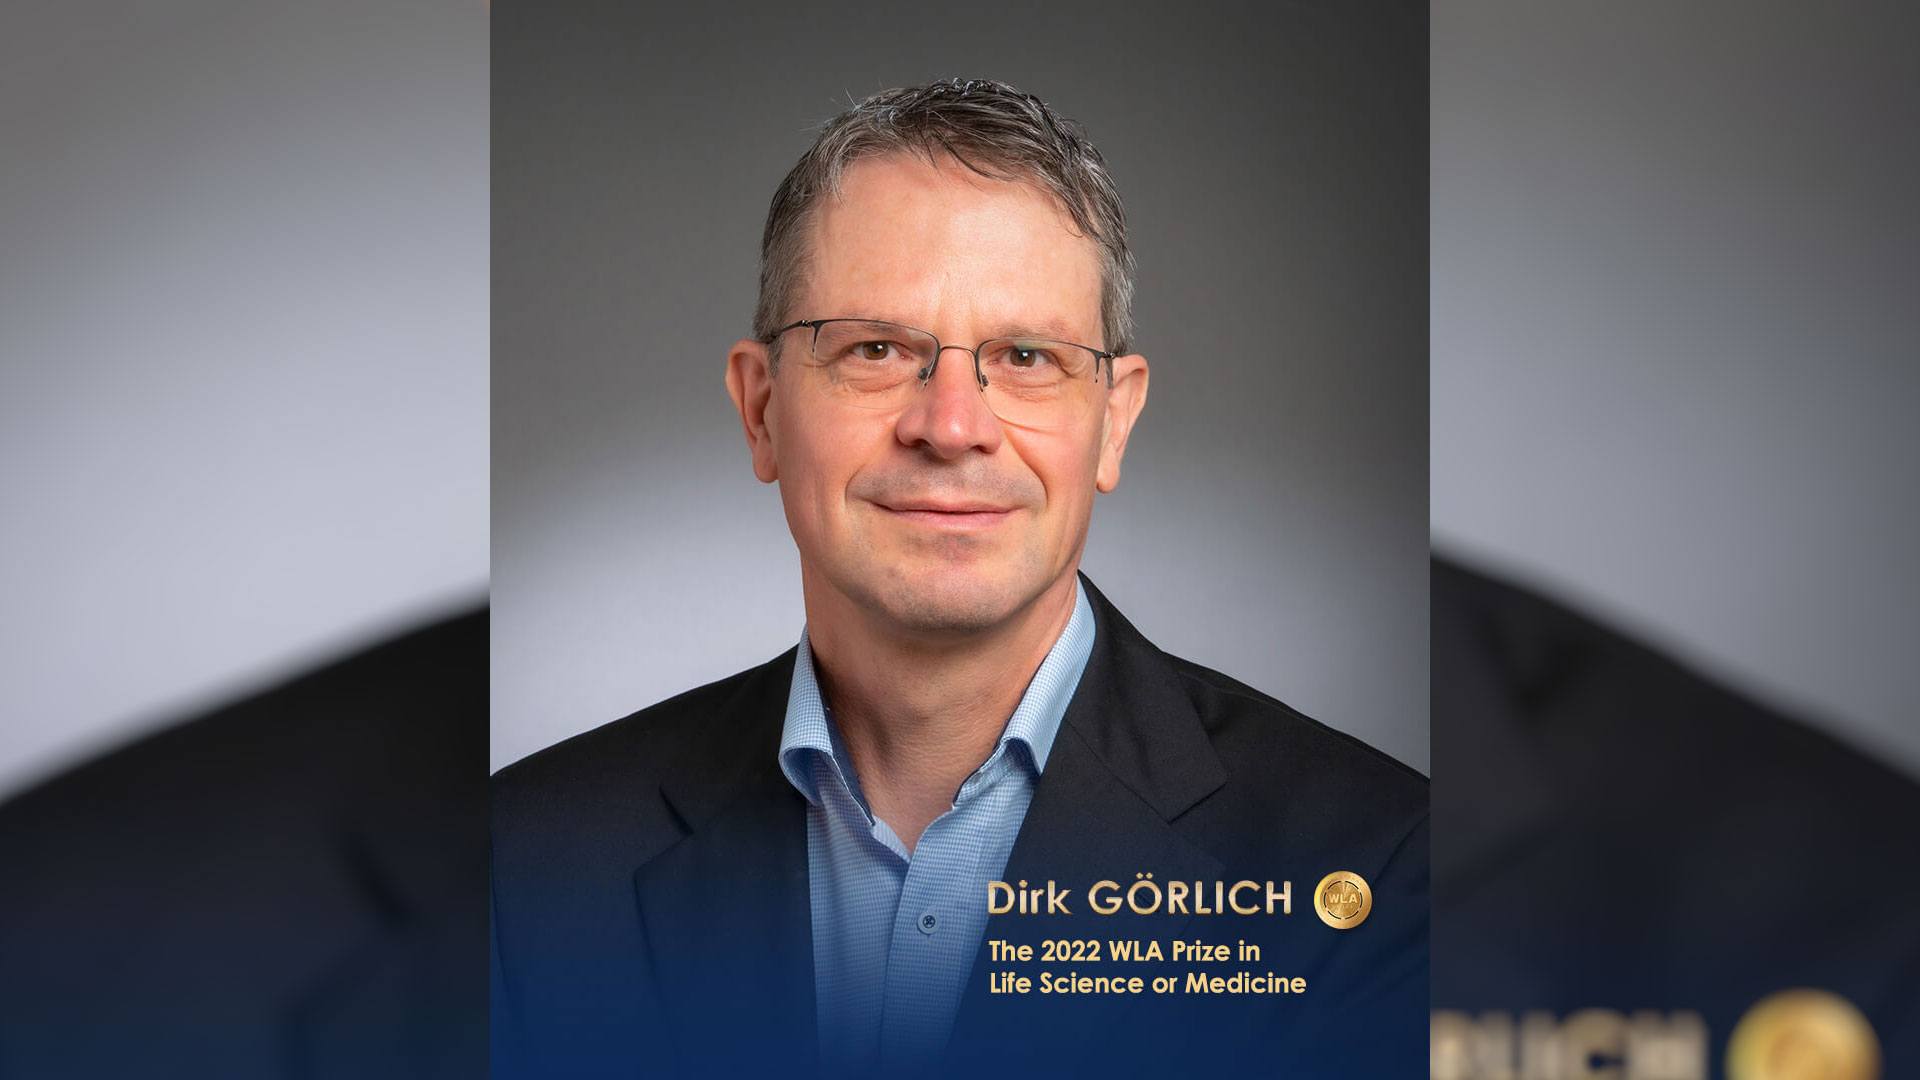 Dirk Görlich awarded $1.39m WLA Prize in Life Science or Medicine